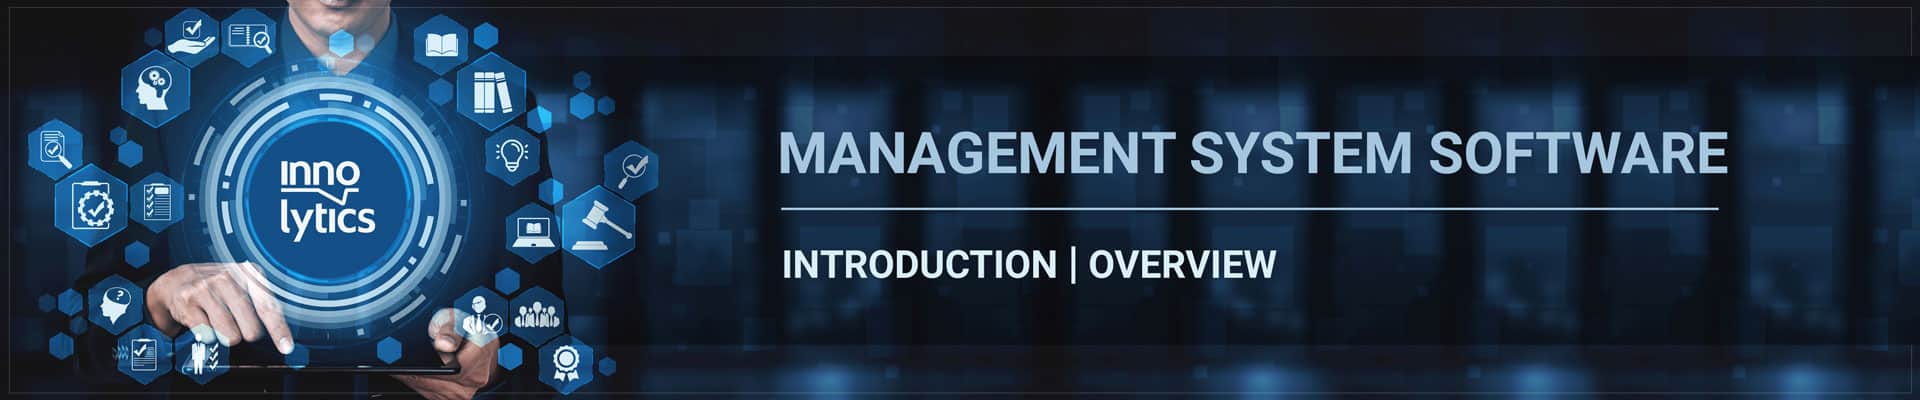 innolytics-innovation-management-system-software